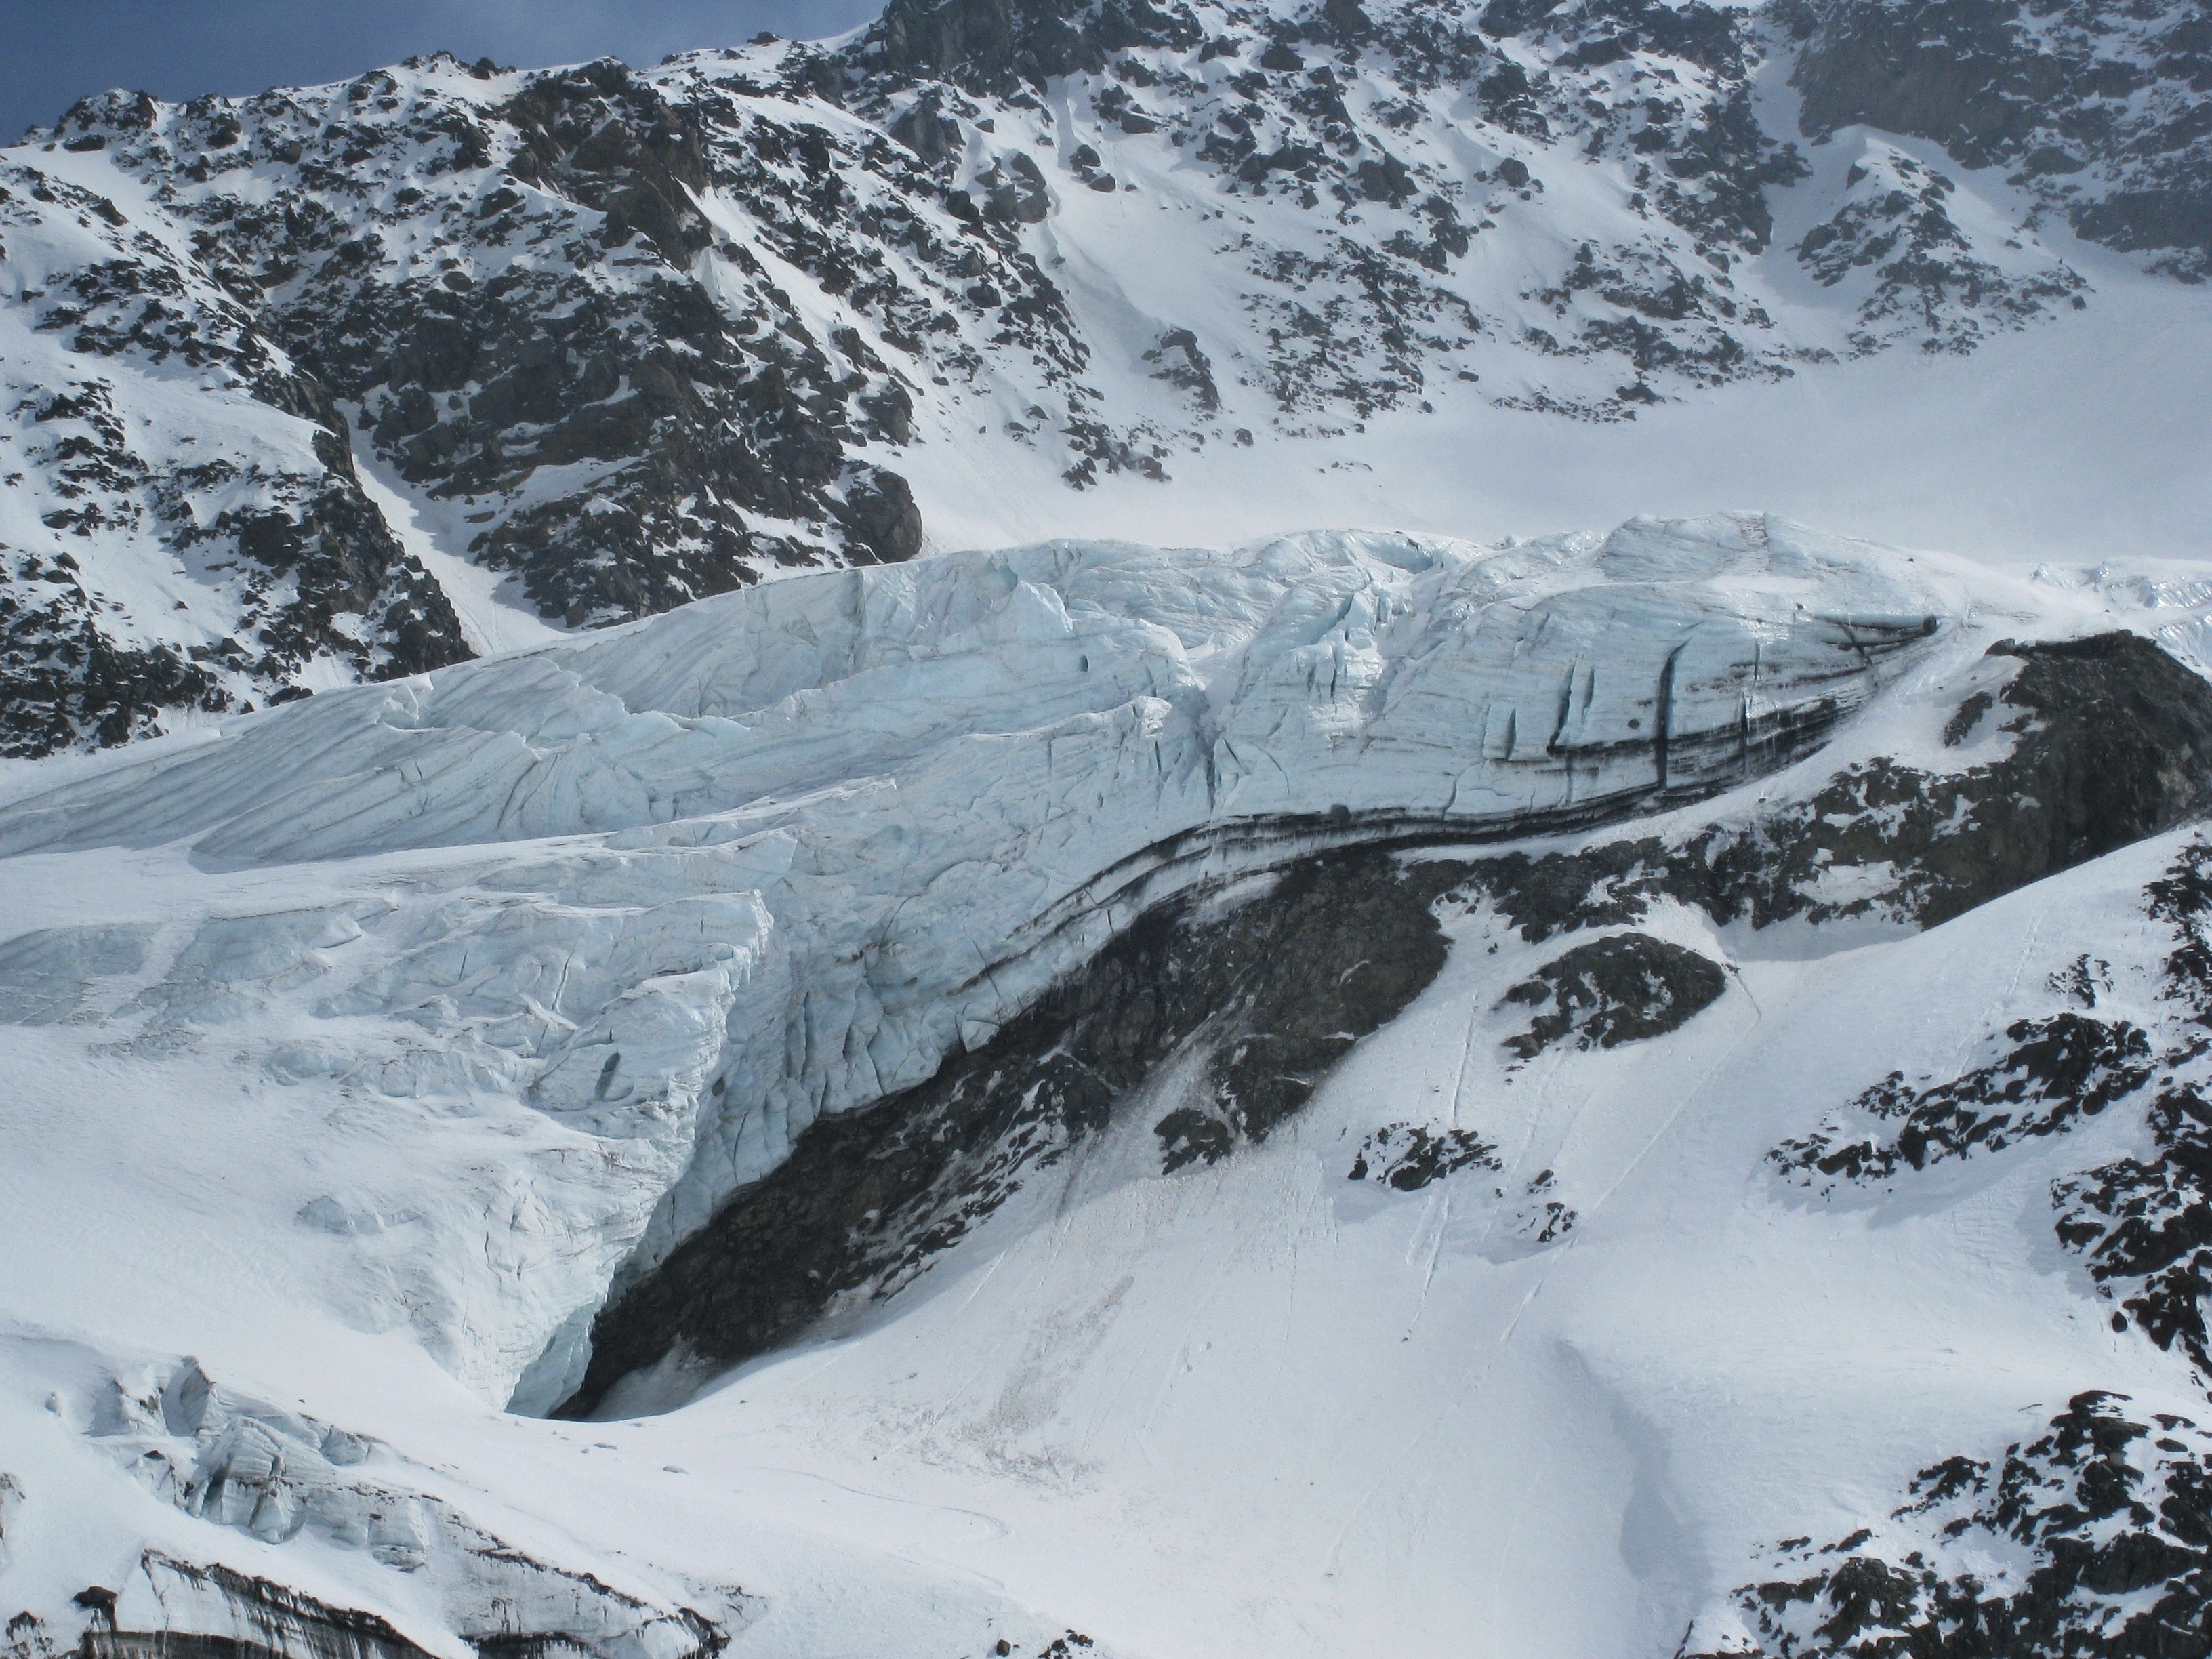 Kaunertal Glacier, Glacial Ice, snow, mountain